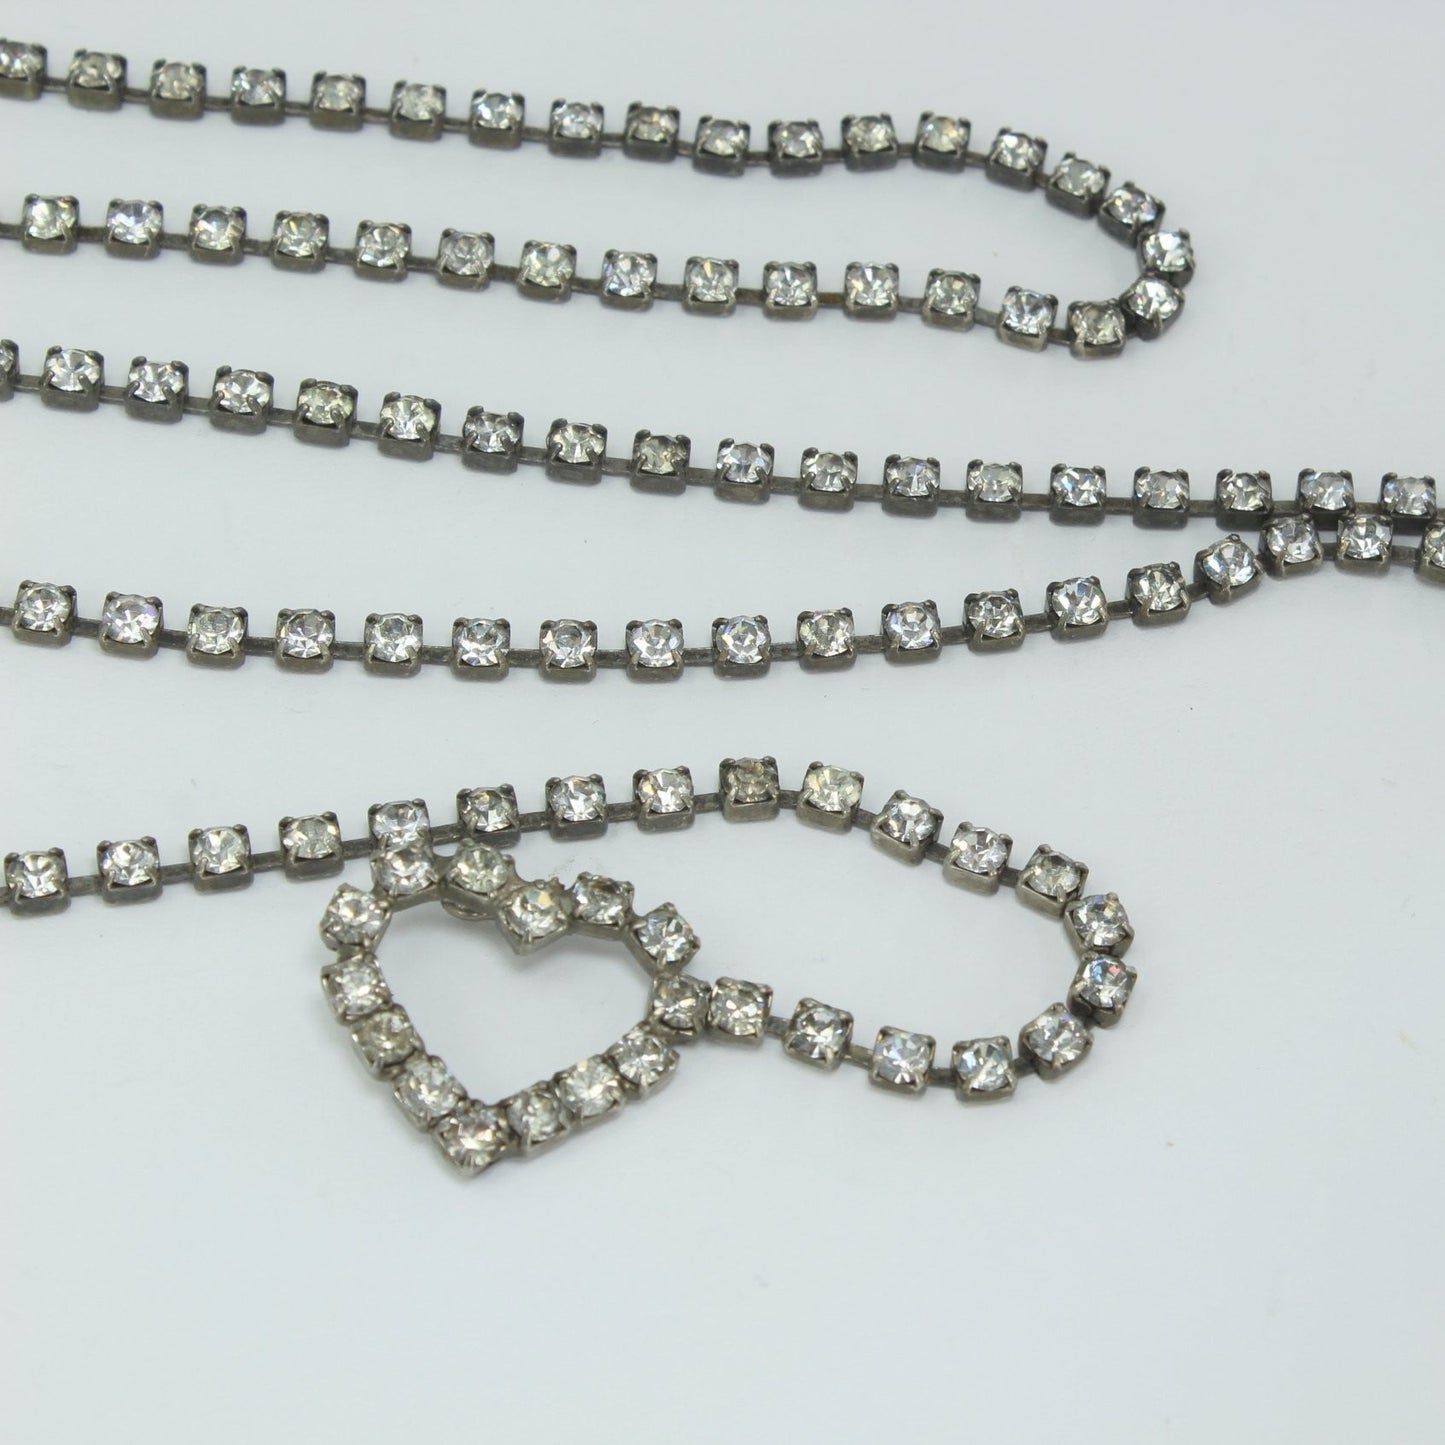 Vintage Rhinestone Belt Heart 38" Chain Wrap Necklace costume maker